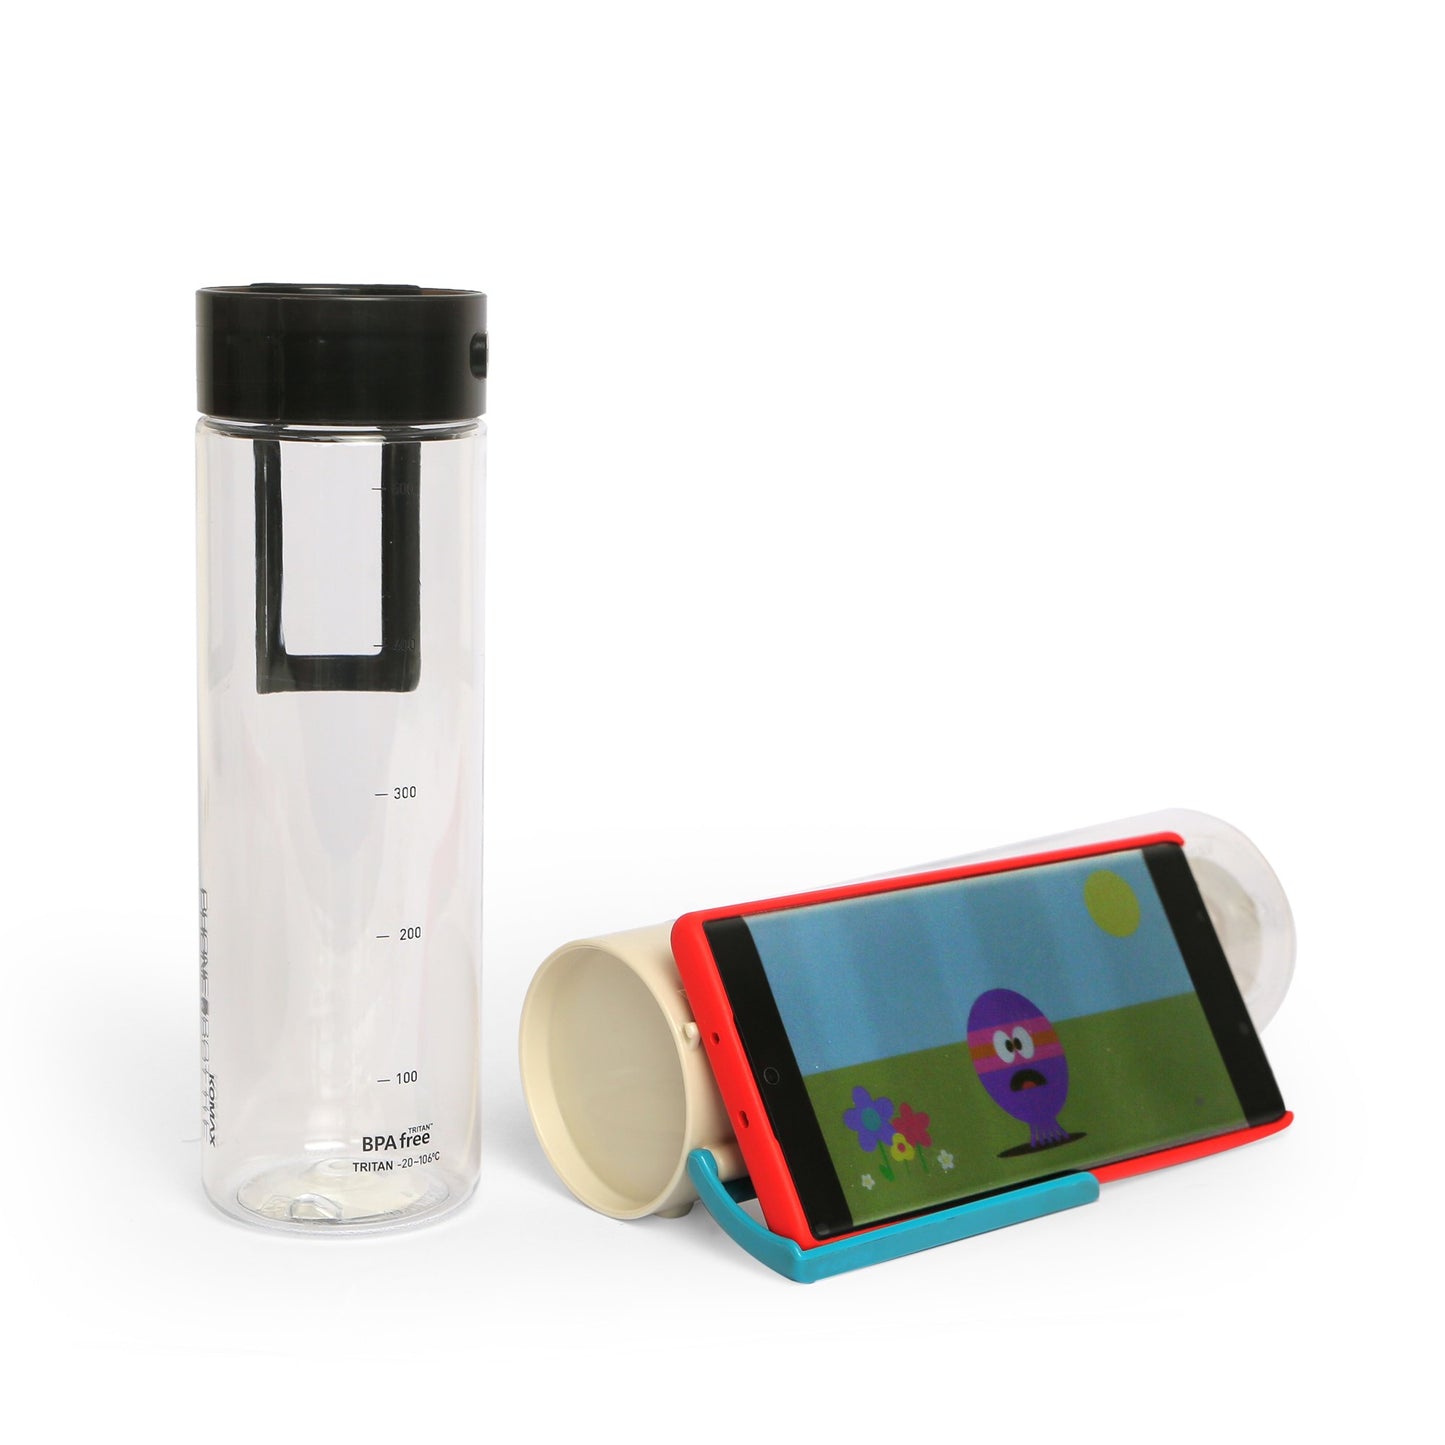 Biokips Water Bottle With Phone Holder 550ML